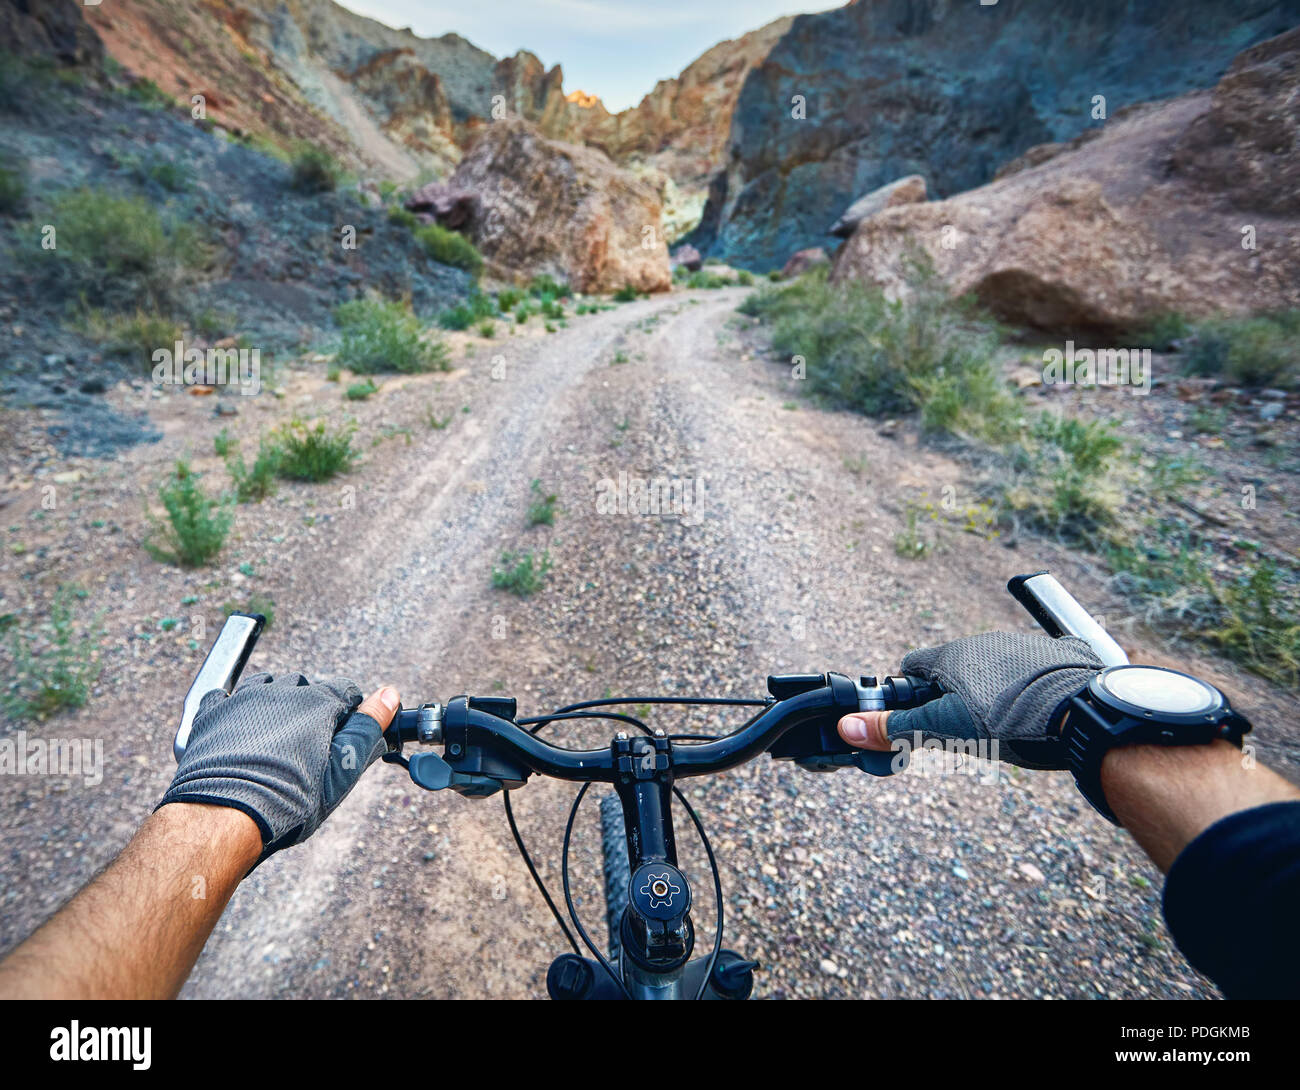 Reiter in Handschuhe holding Lenker Mountainbike in der Wüste Canyon. Extreme Sport Konzept. Stockfoto